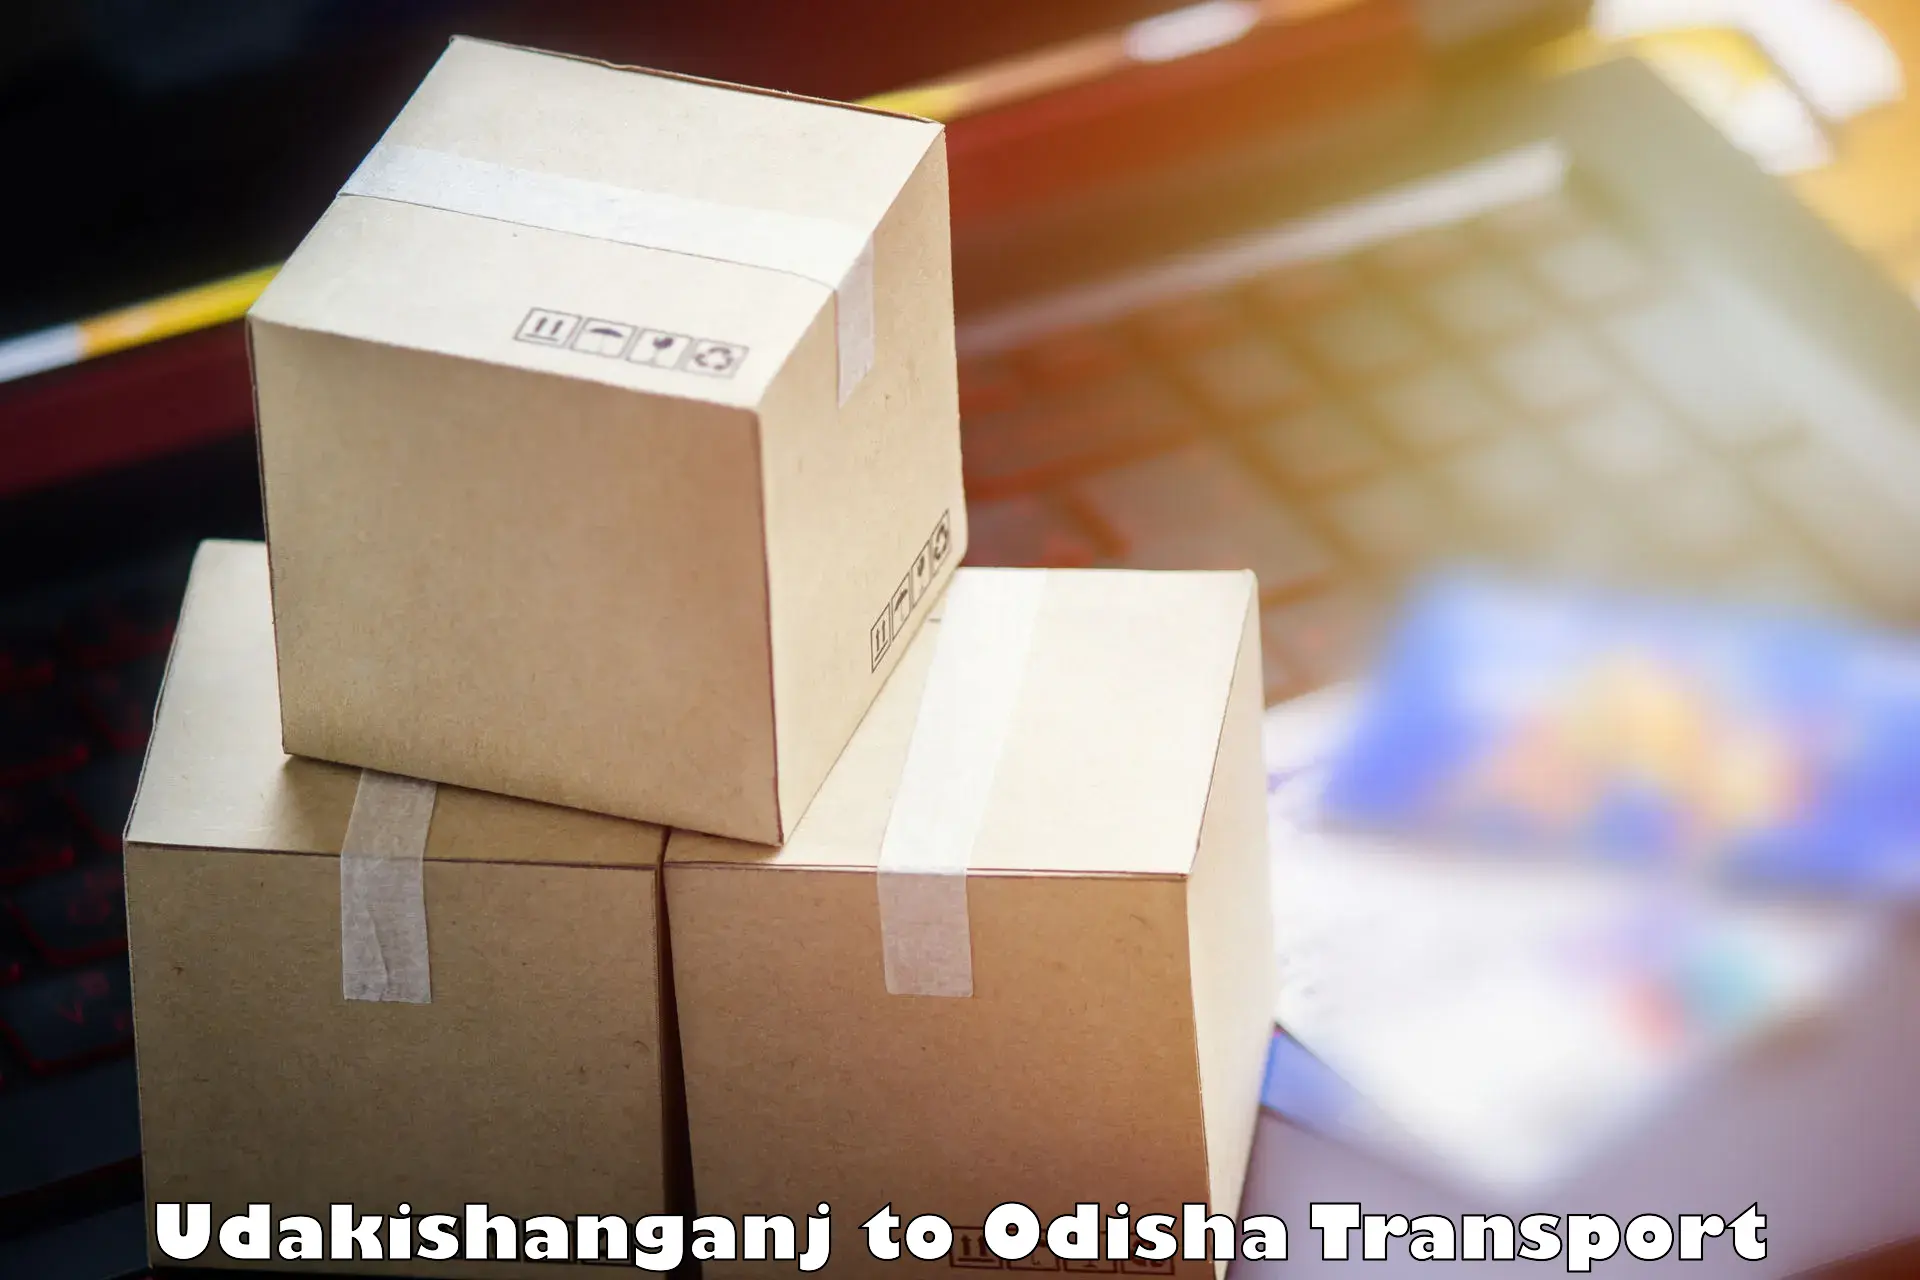 Truck transport companies in India Udakishanganj to Joda